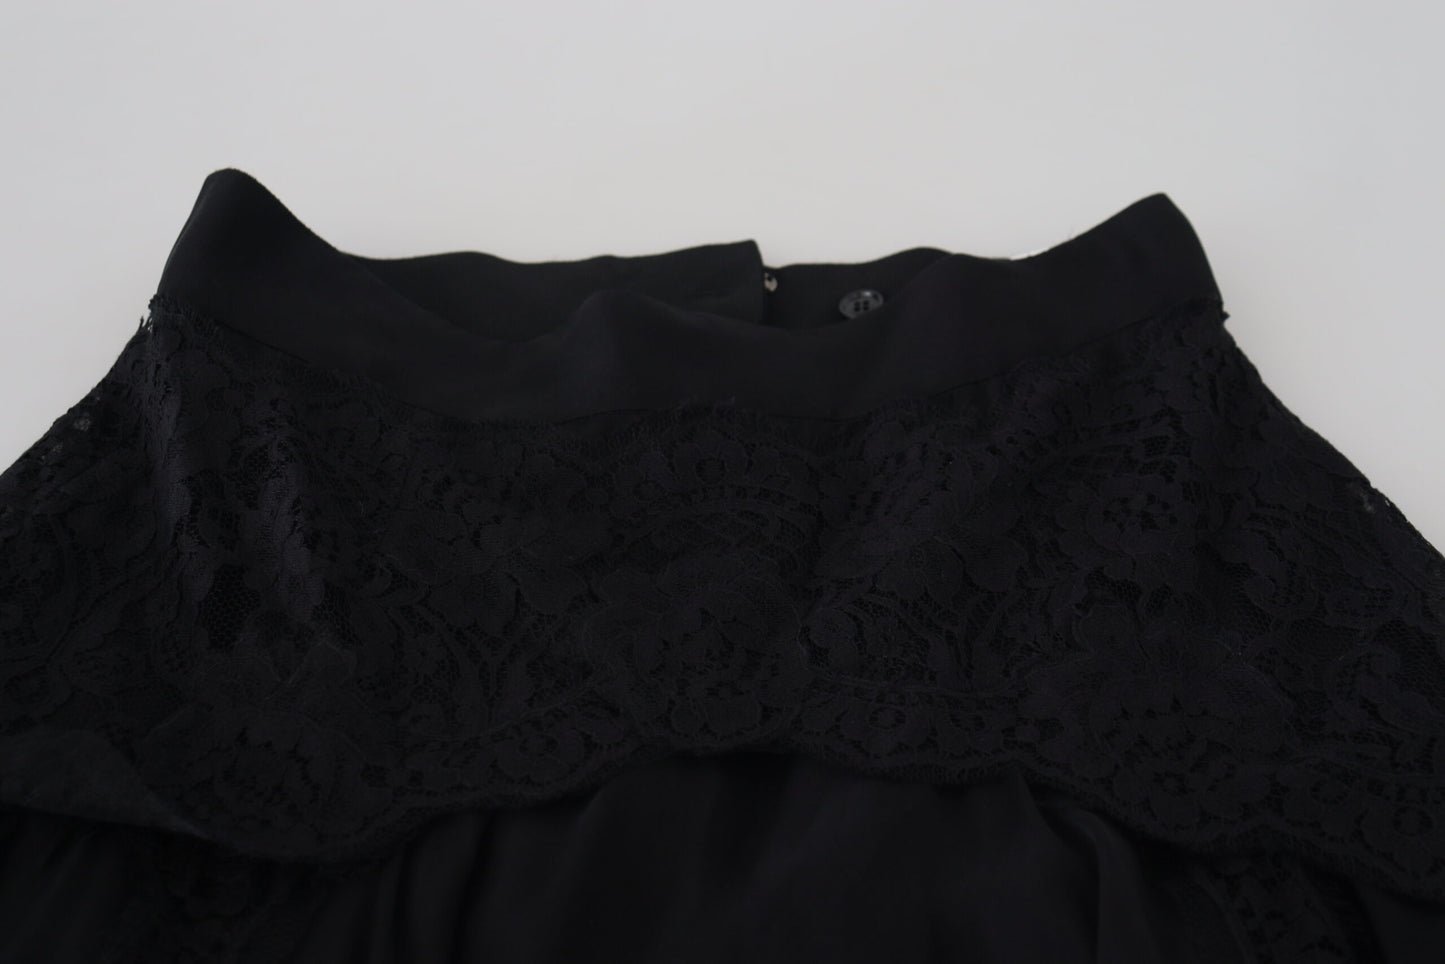 Dolce & Gabbana Elegant High-Waist Midi Silk-Blend Skirt